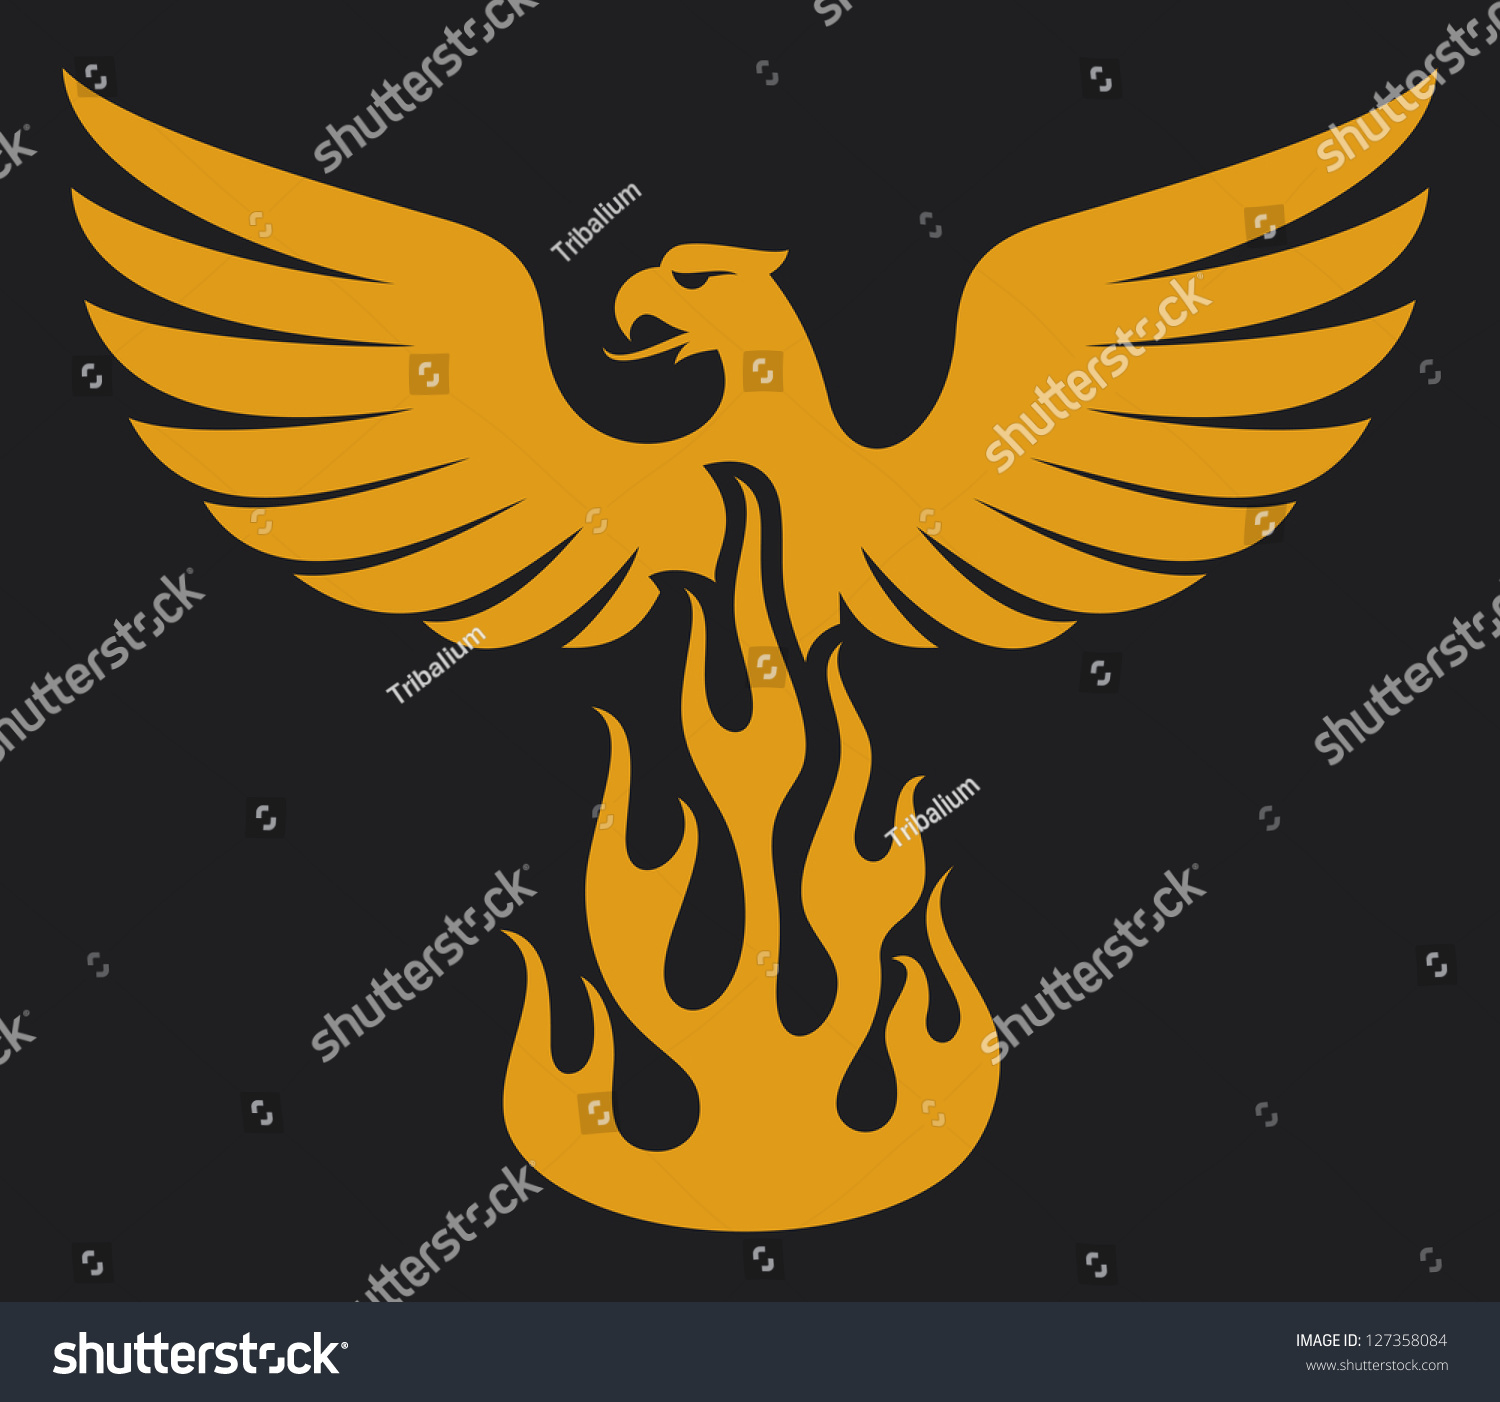 Phoenix Bird Stock Photo 127358084 : Shutterstock